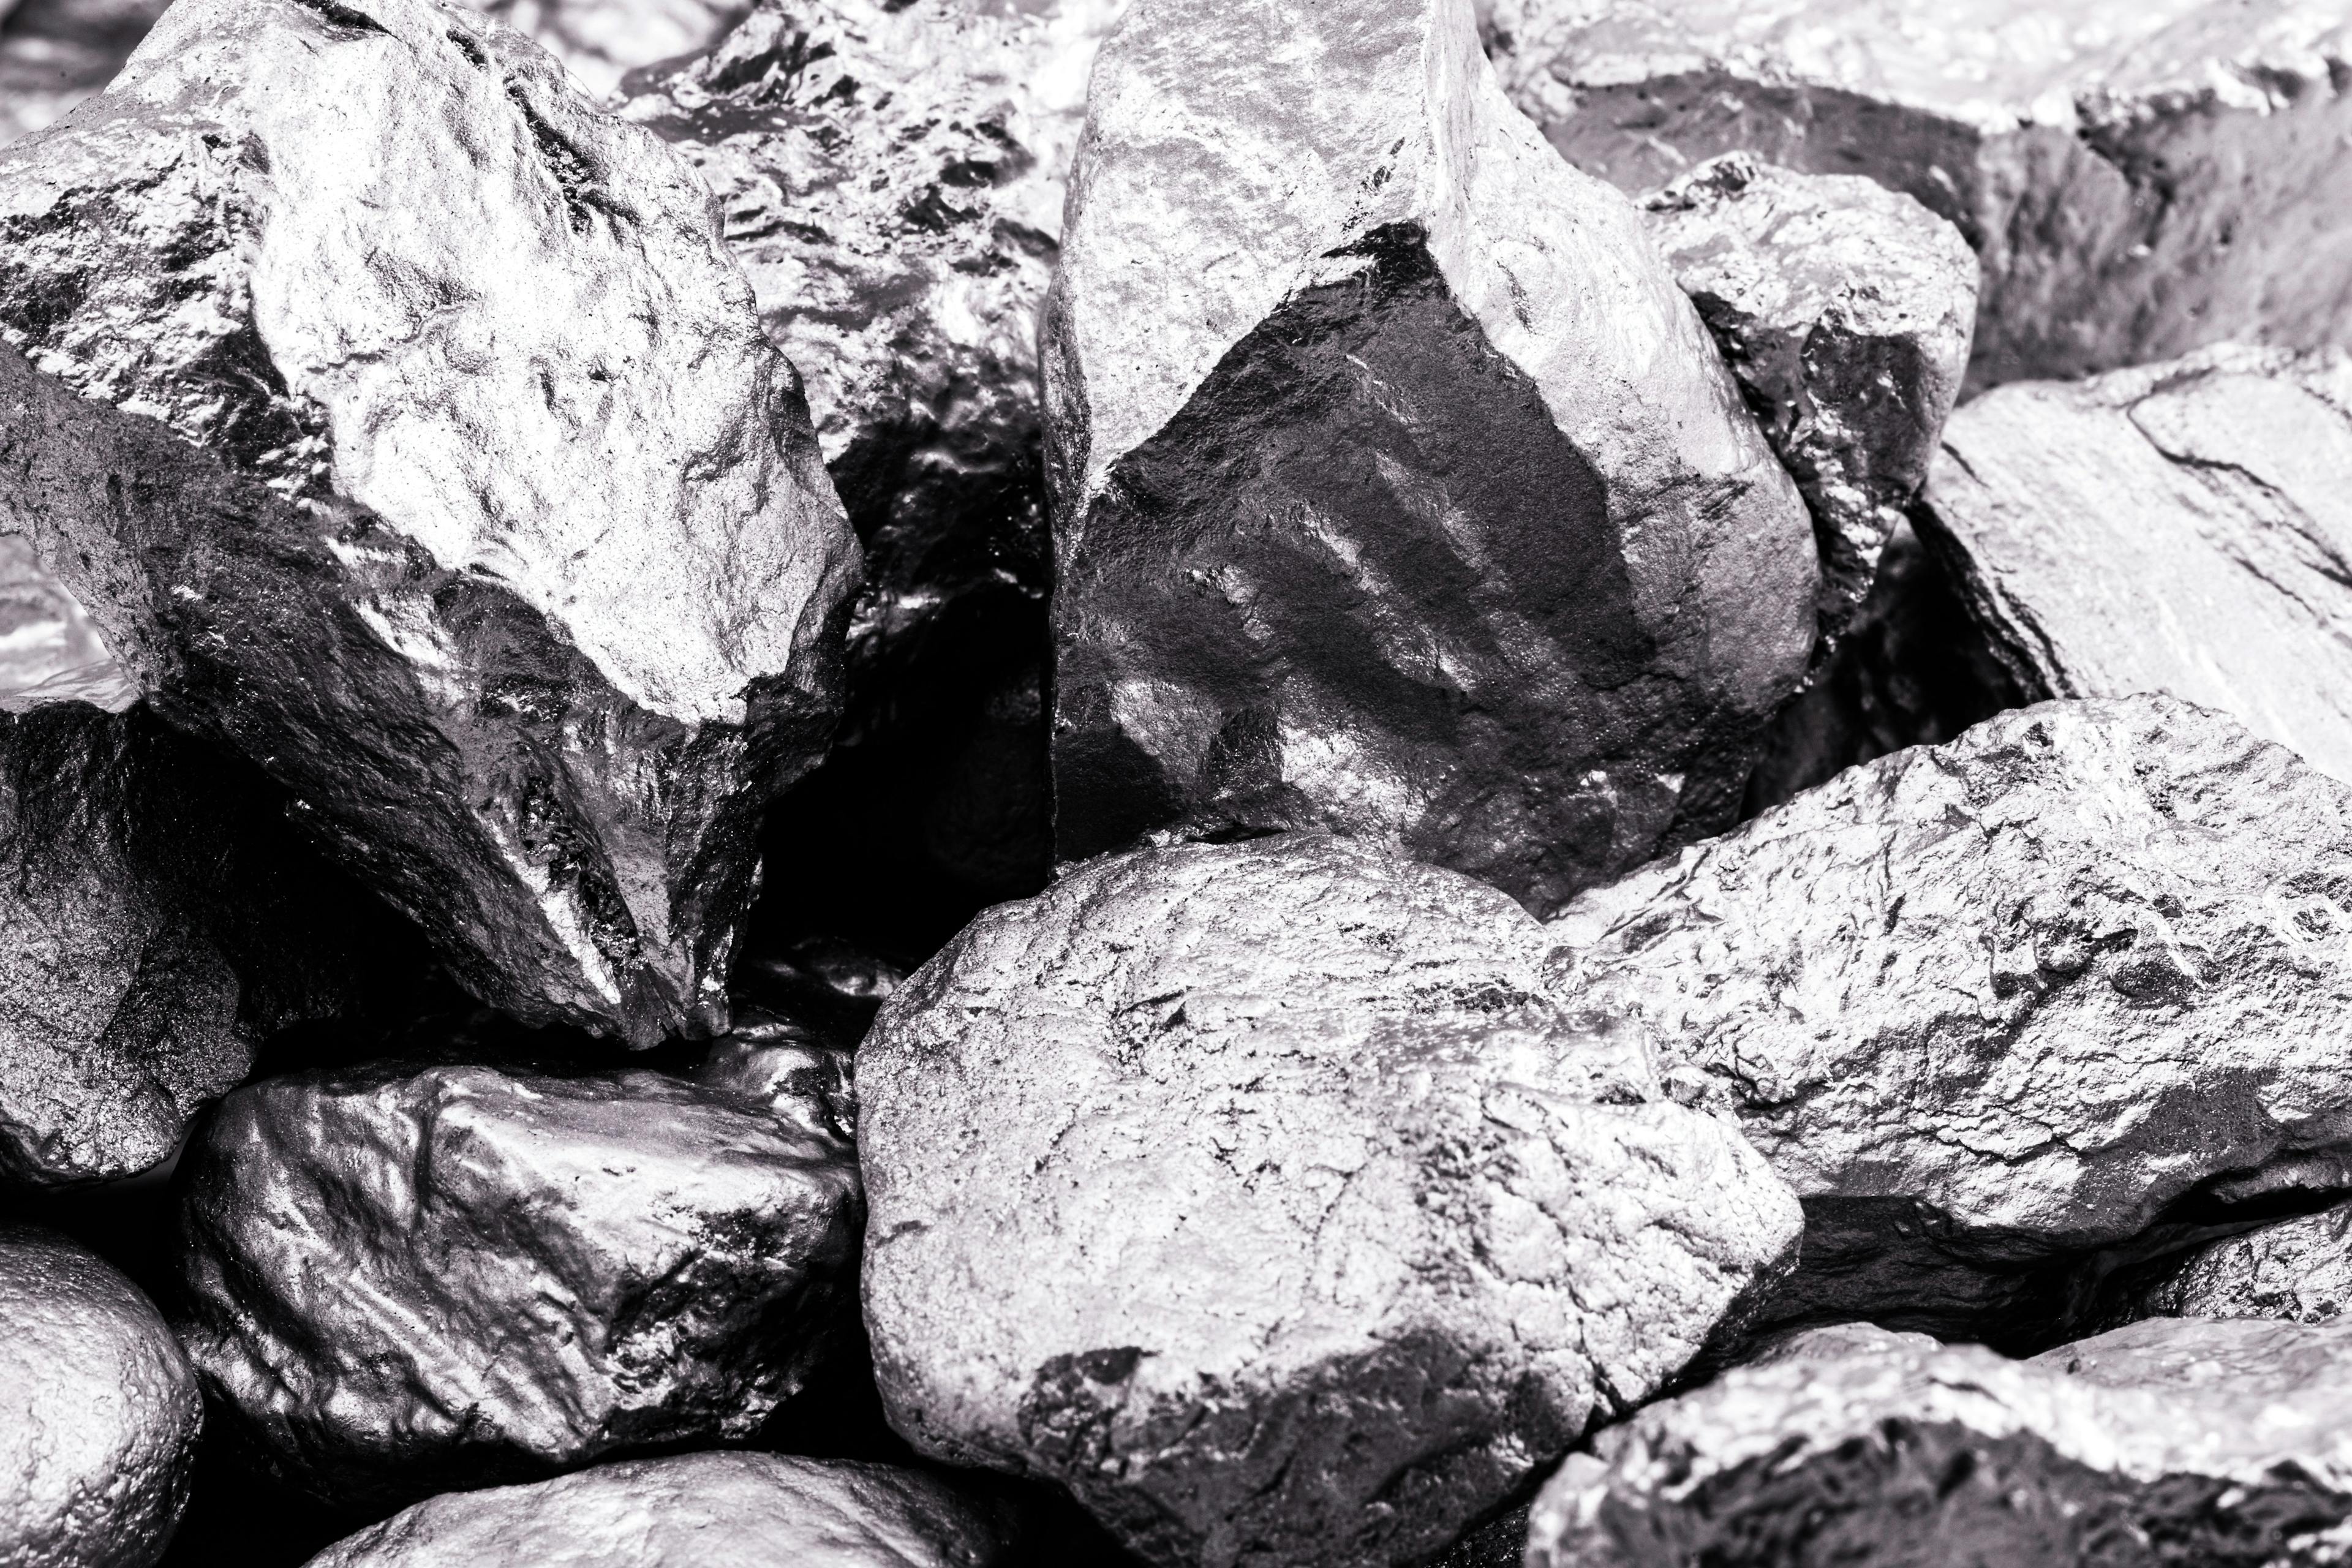 Europium, internal transition metal forming part of the rare earth group | Image Credit: © RHJ - stock.adobe.com